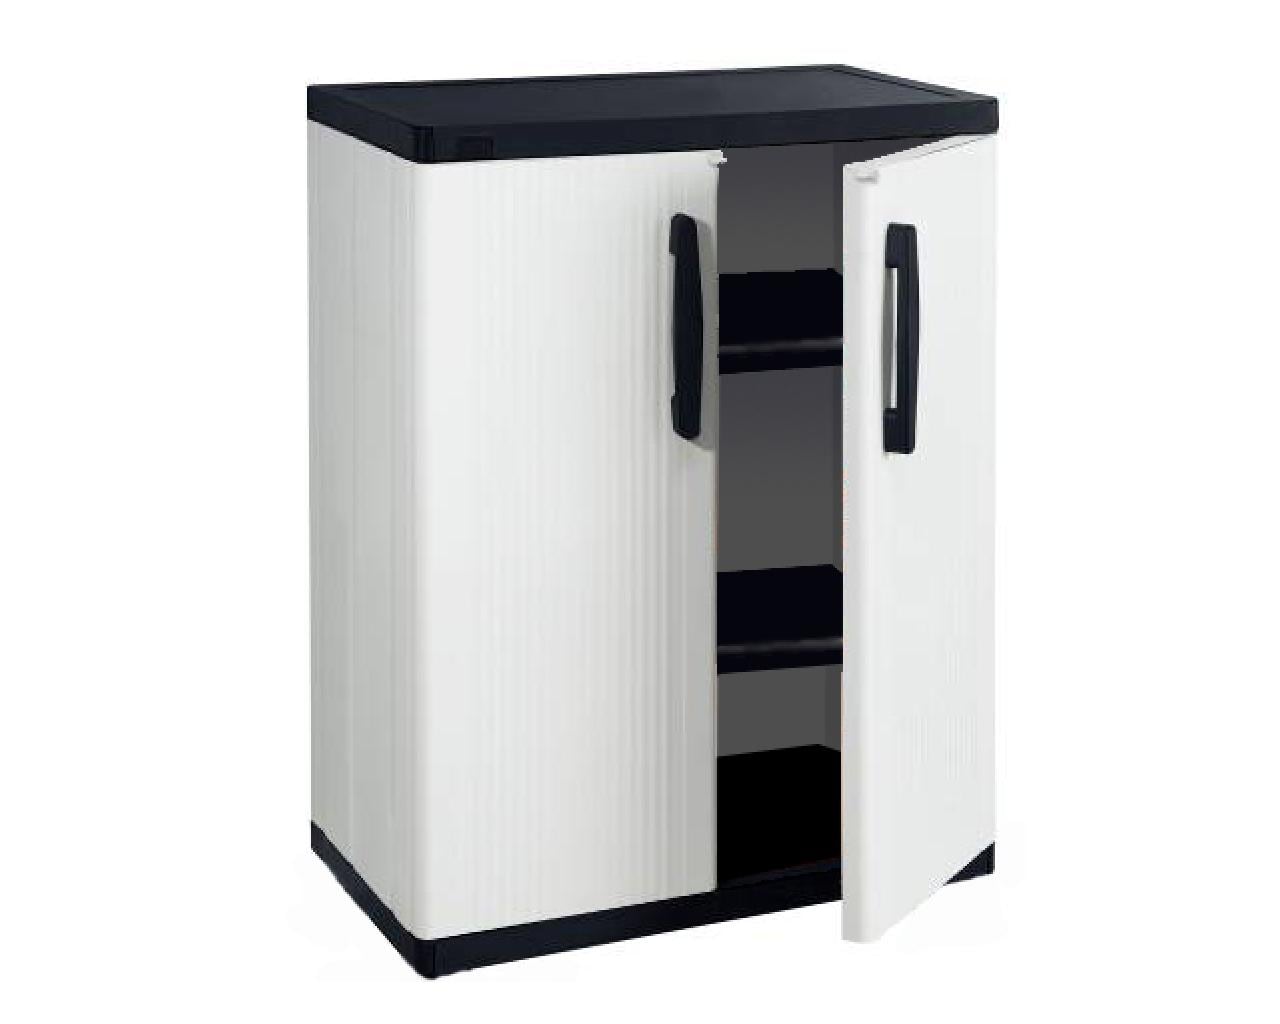 enviro elements Plastic Garage Cabinet (34.5-in W x 36.25-in H x